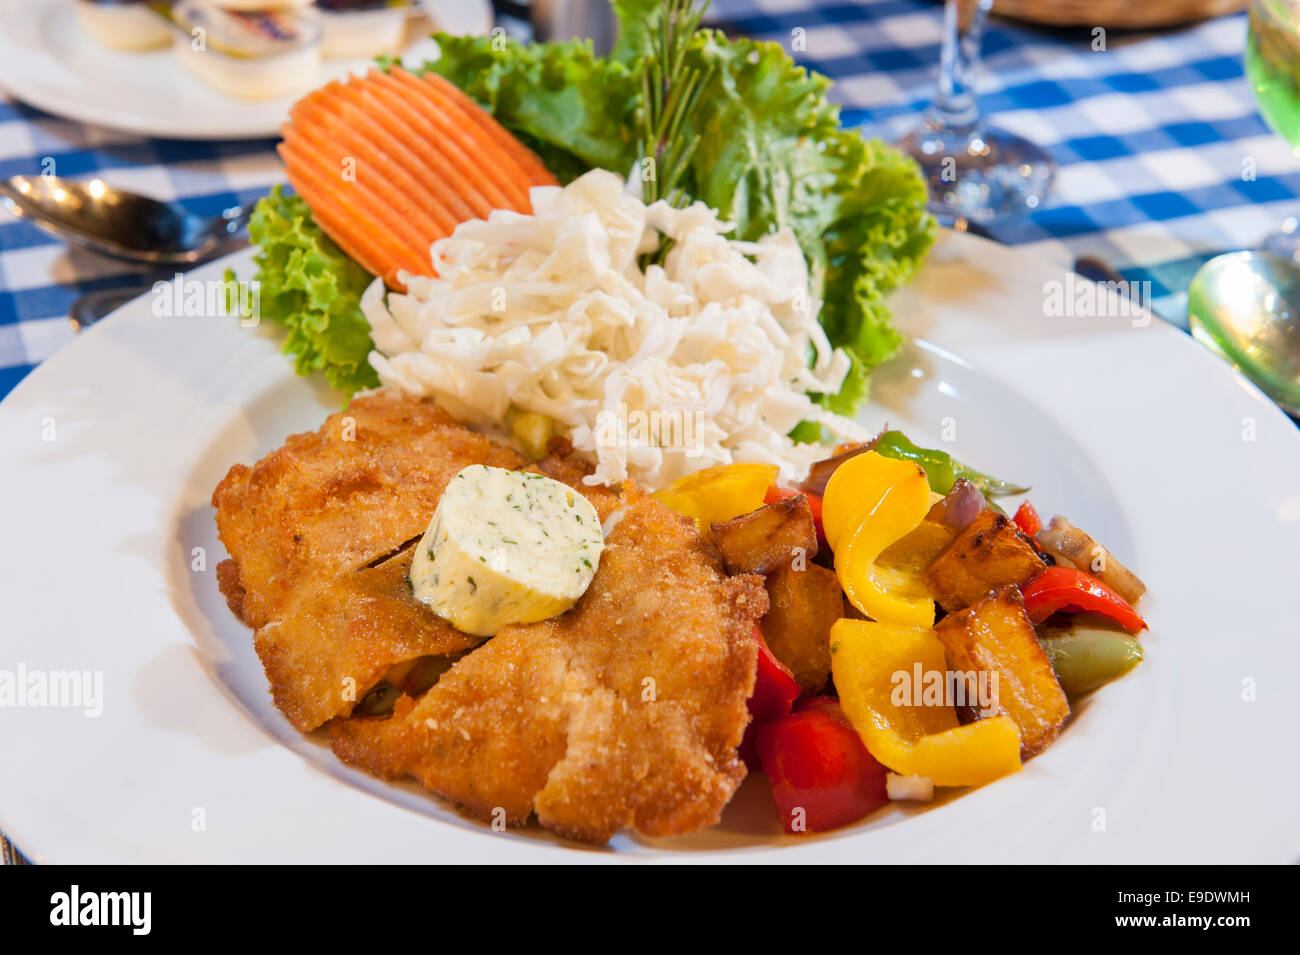 Chicken schnitzel a la carte meal with salad Stock Photo